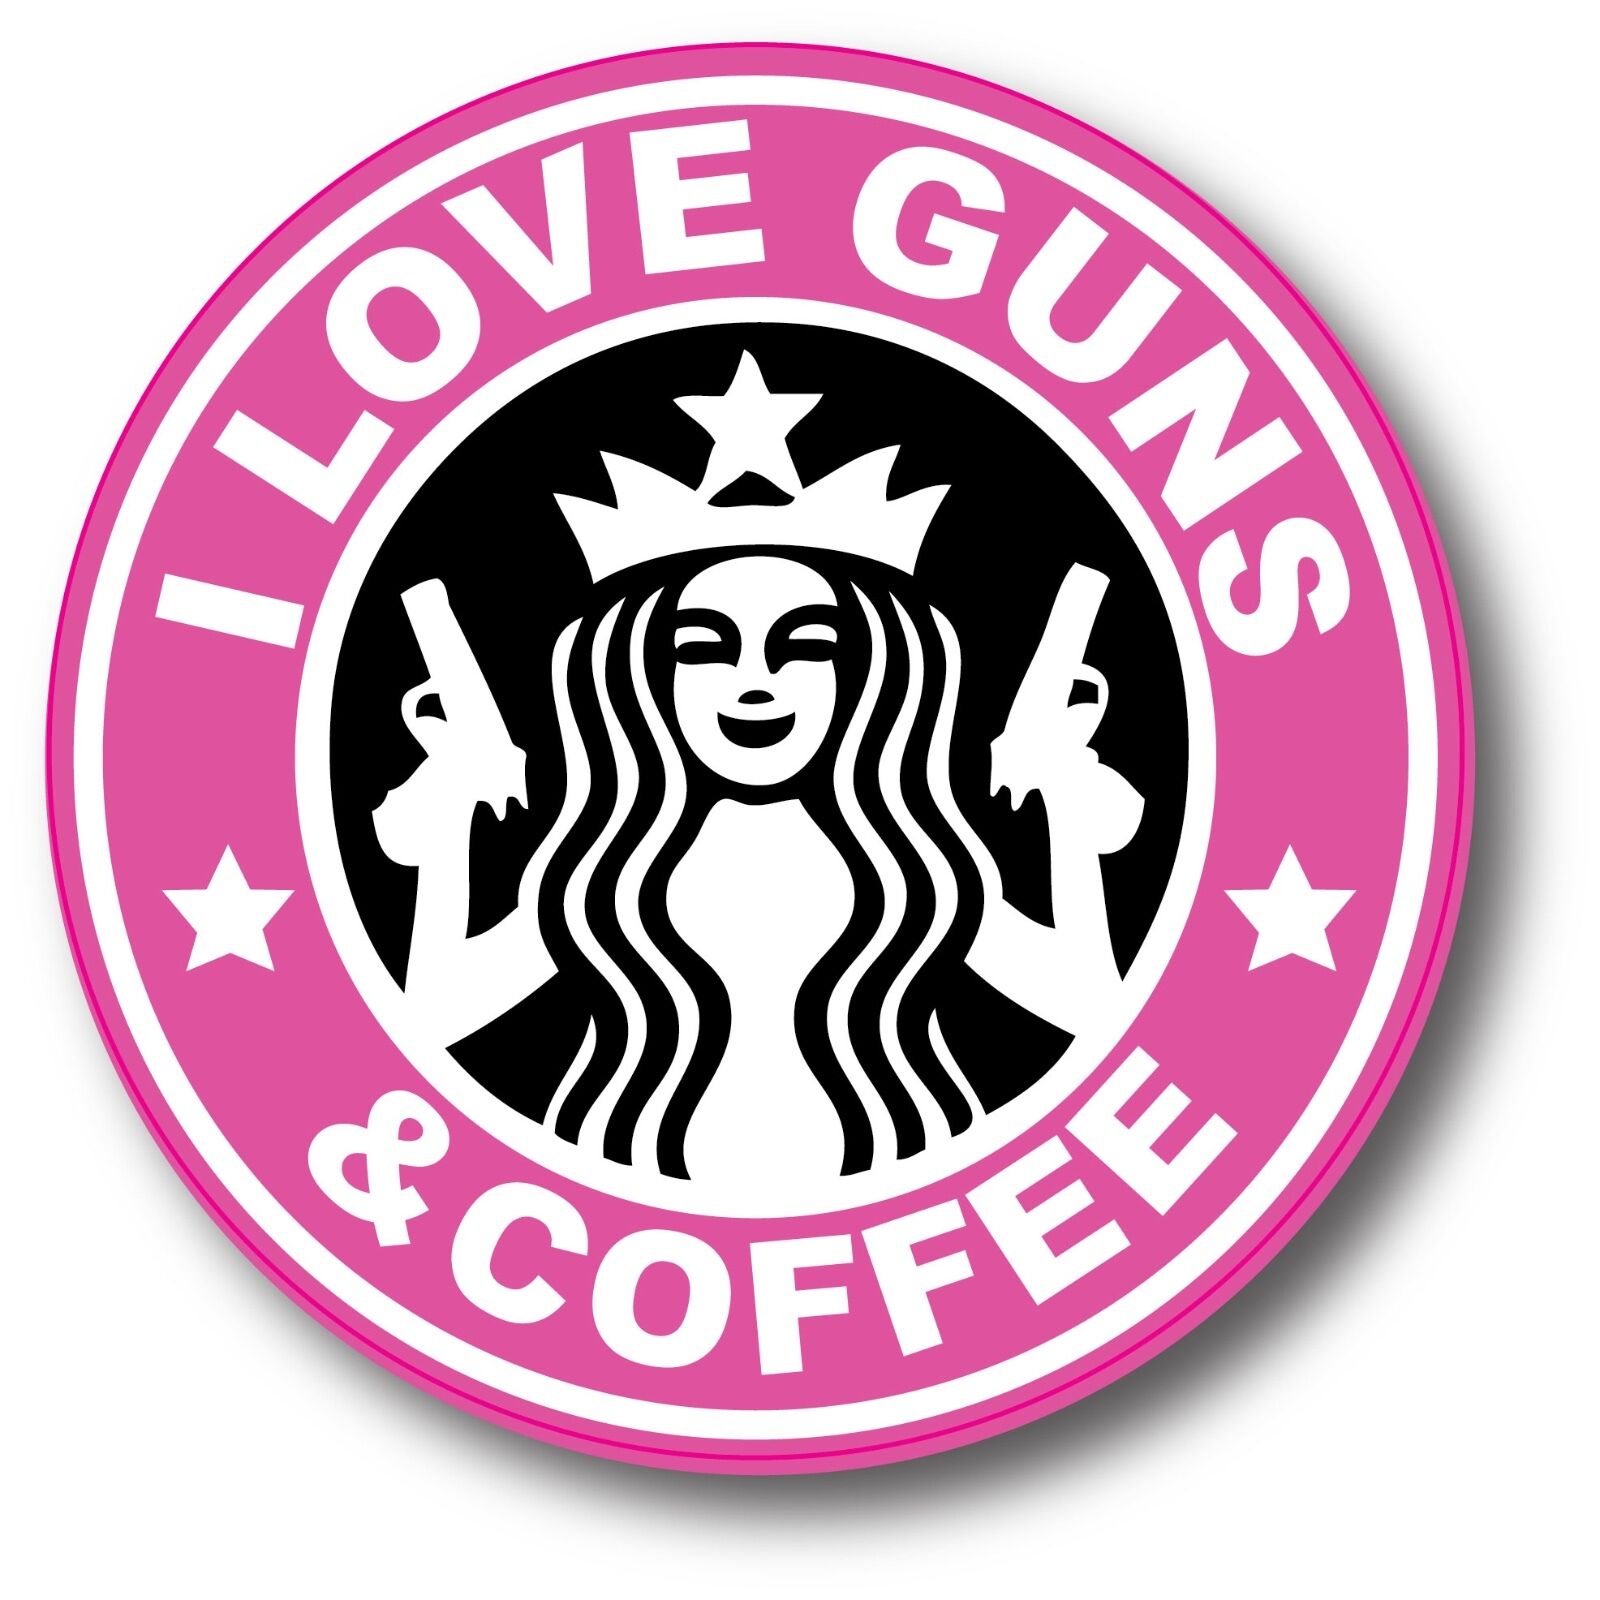 PINK I Love Guns And Coffee Fits YETI Car Bumper Vinyl Sticker Decal 3